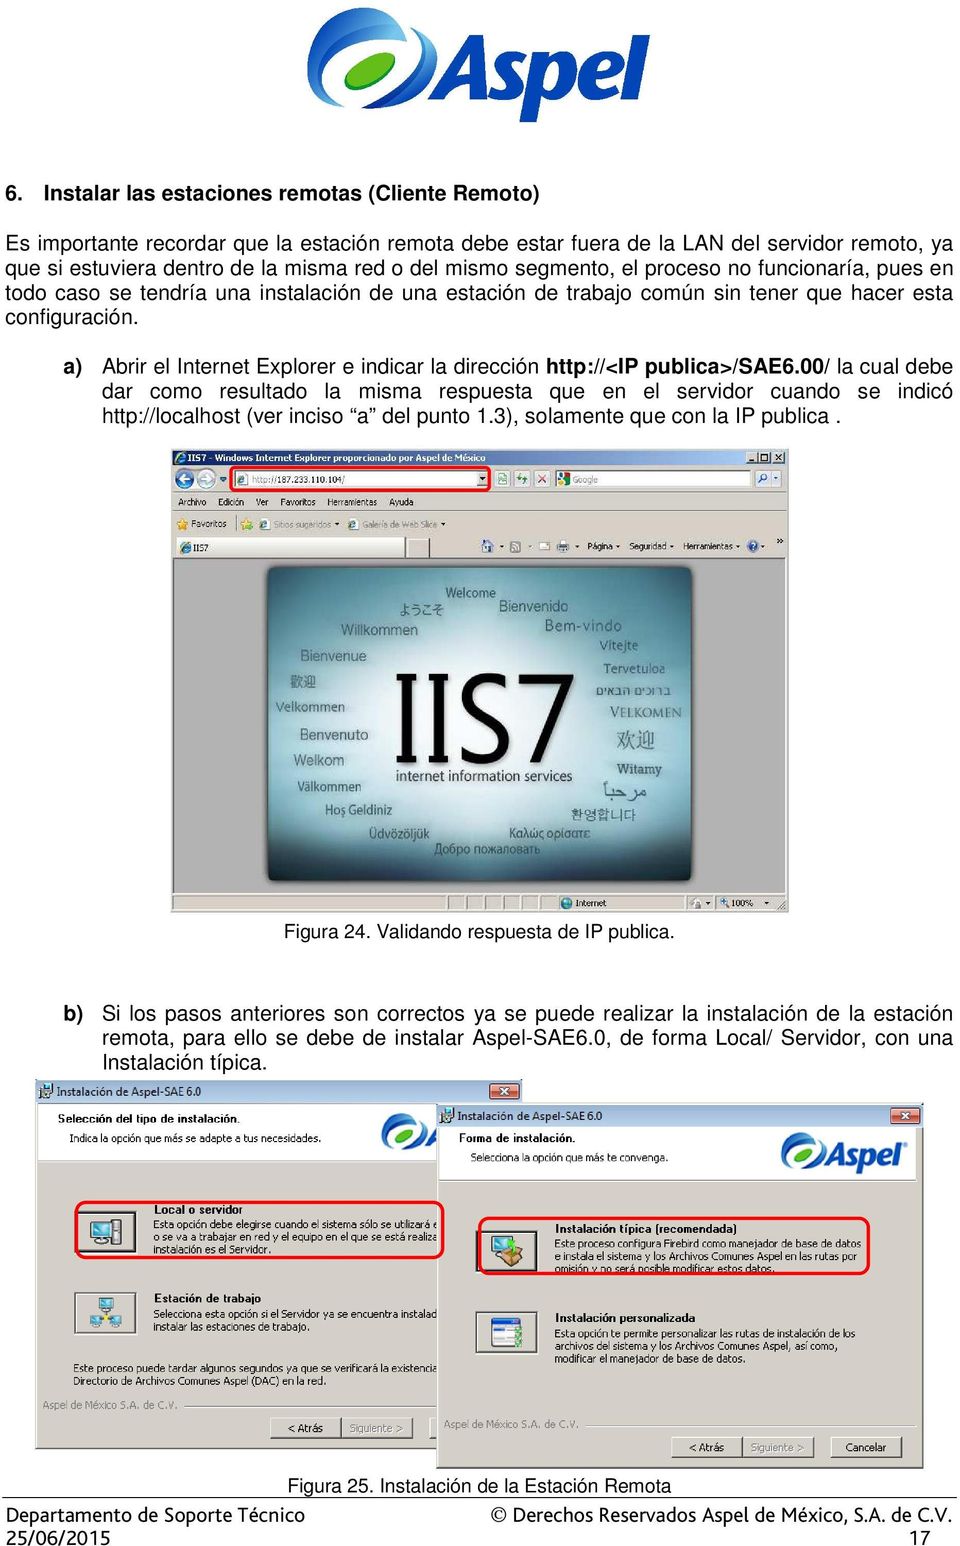 a) Abrir el Internet Explorer e indicar la dirección http://<ip publica>/sae6.